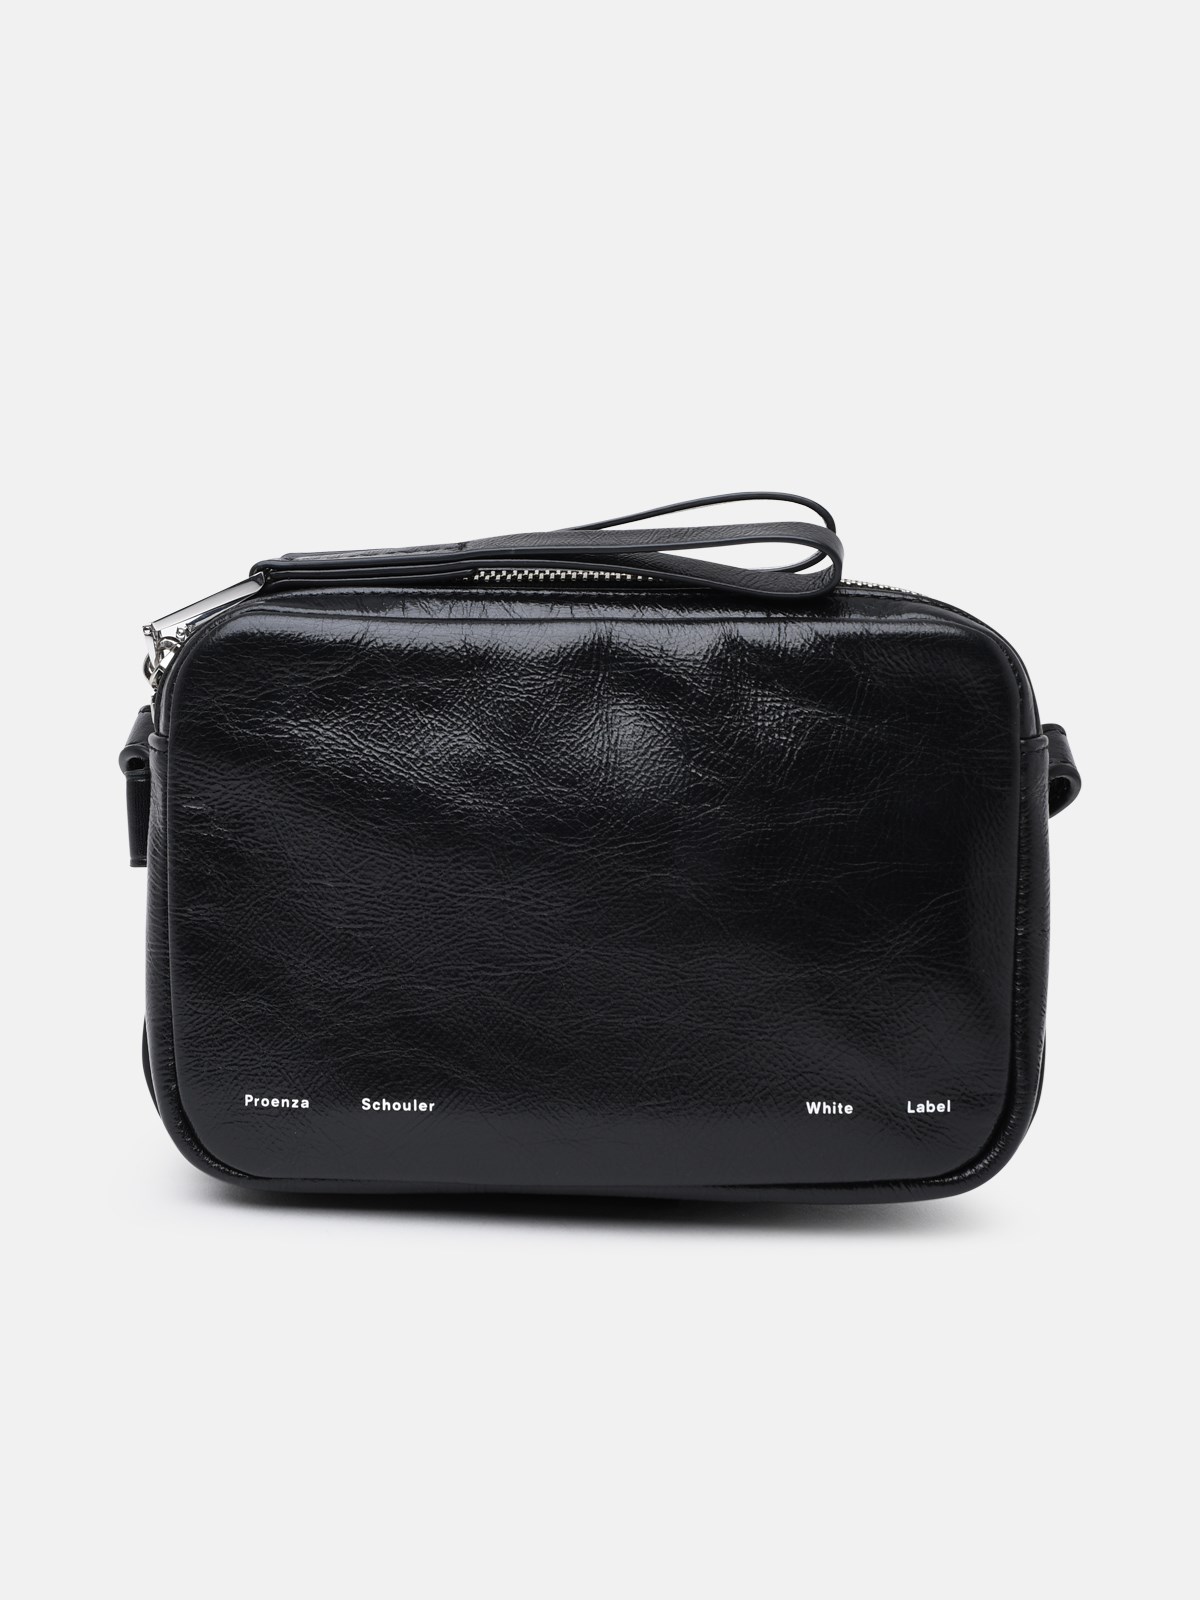 Proenza Schouler White Label Black Leather 'watts' Camera Bag